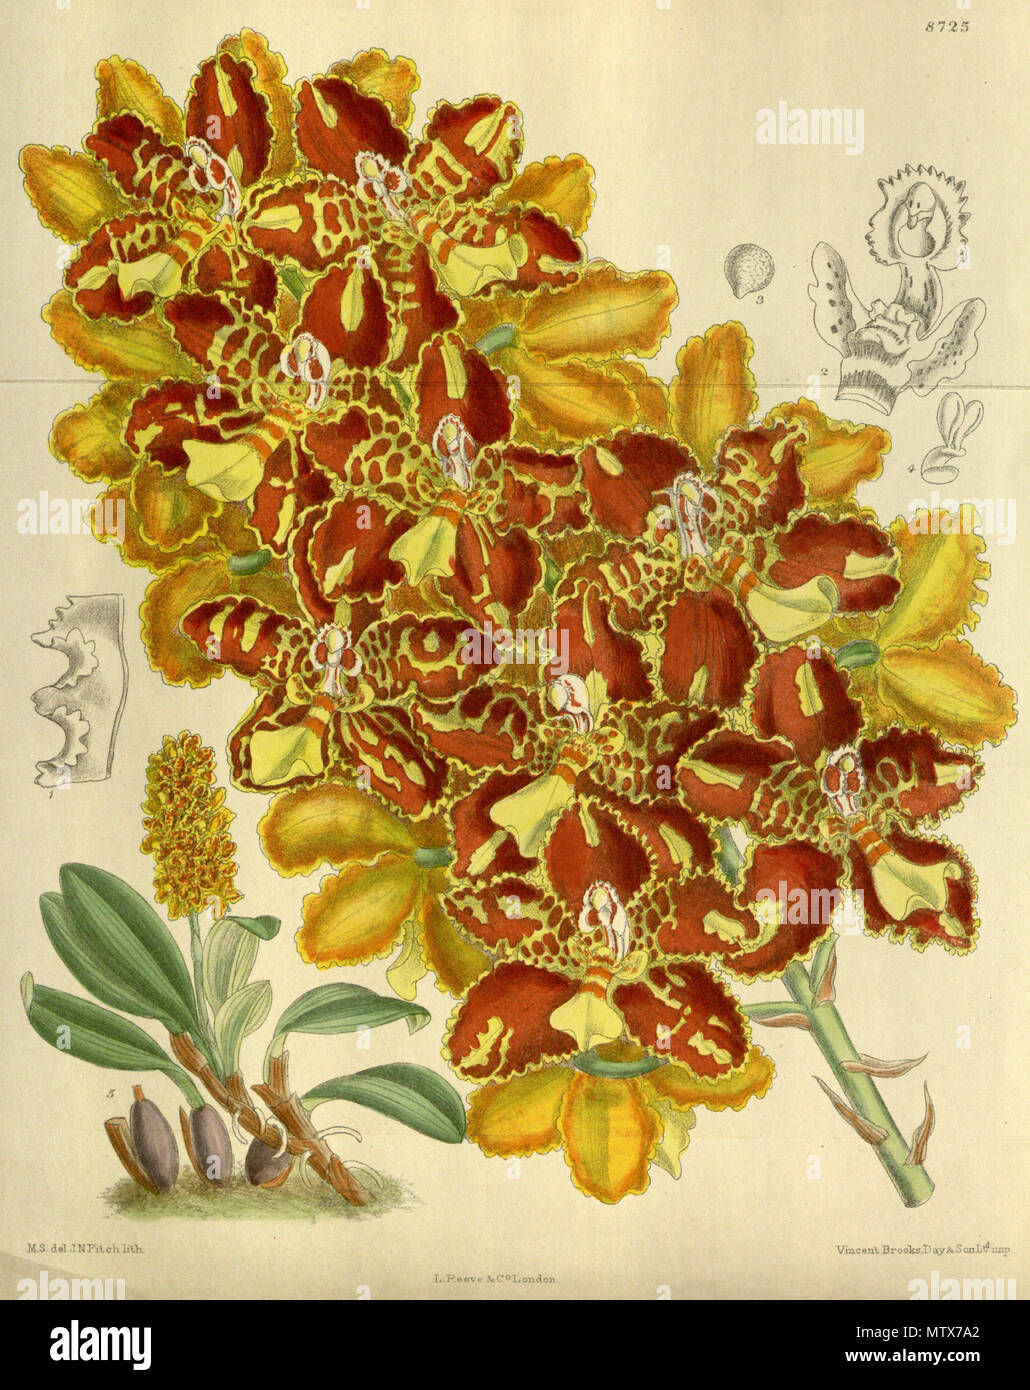 . Odontoglossum chiriquense (= Otoglossum chiriquense), Orchidaceae . 1917. M.S. del., J.N.Fitch lith. 452 Odontoglossum chiriquense 143-8725 Stock Photo